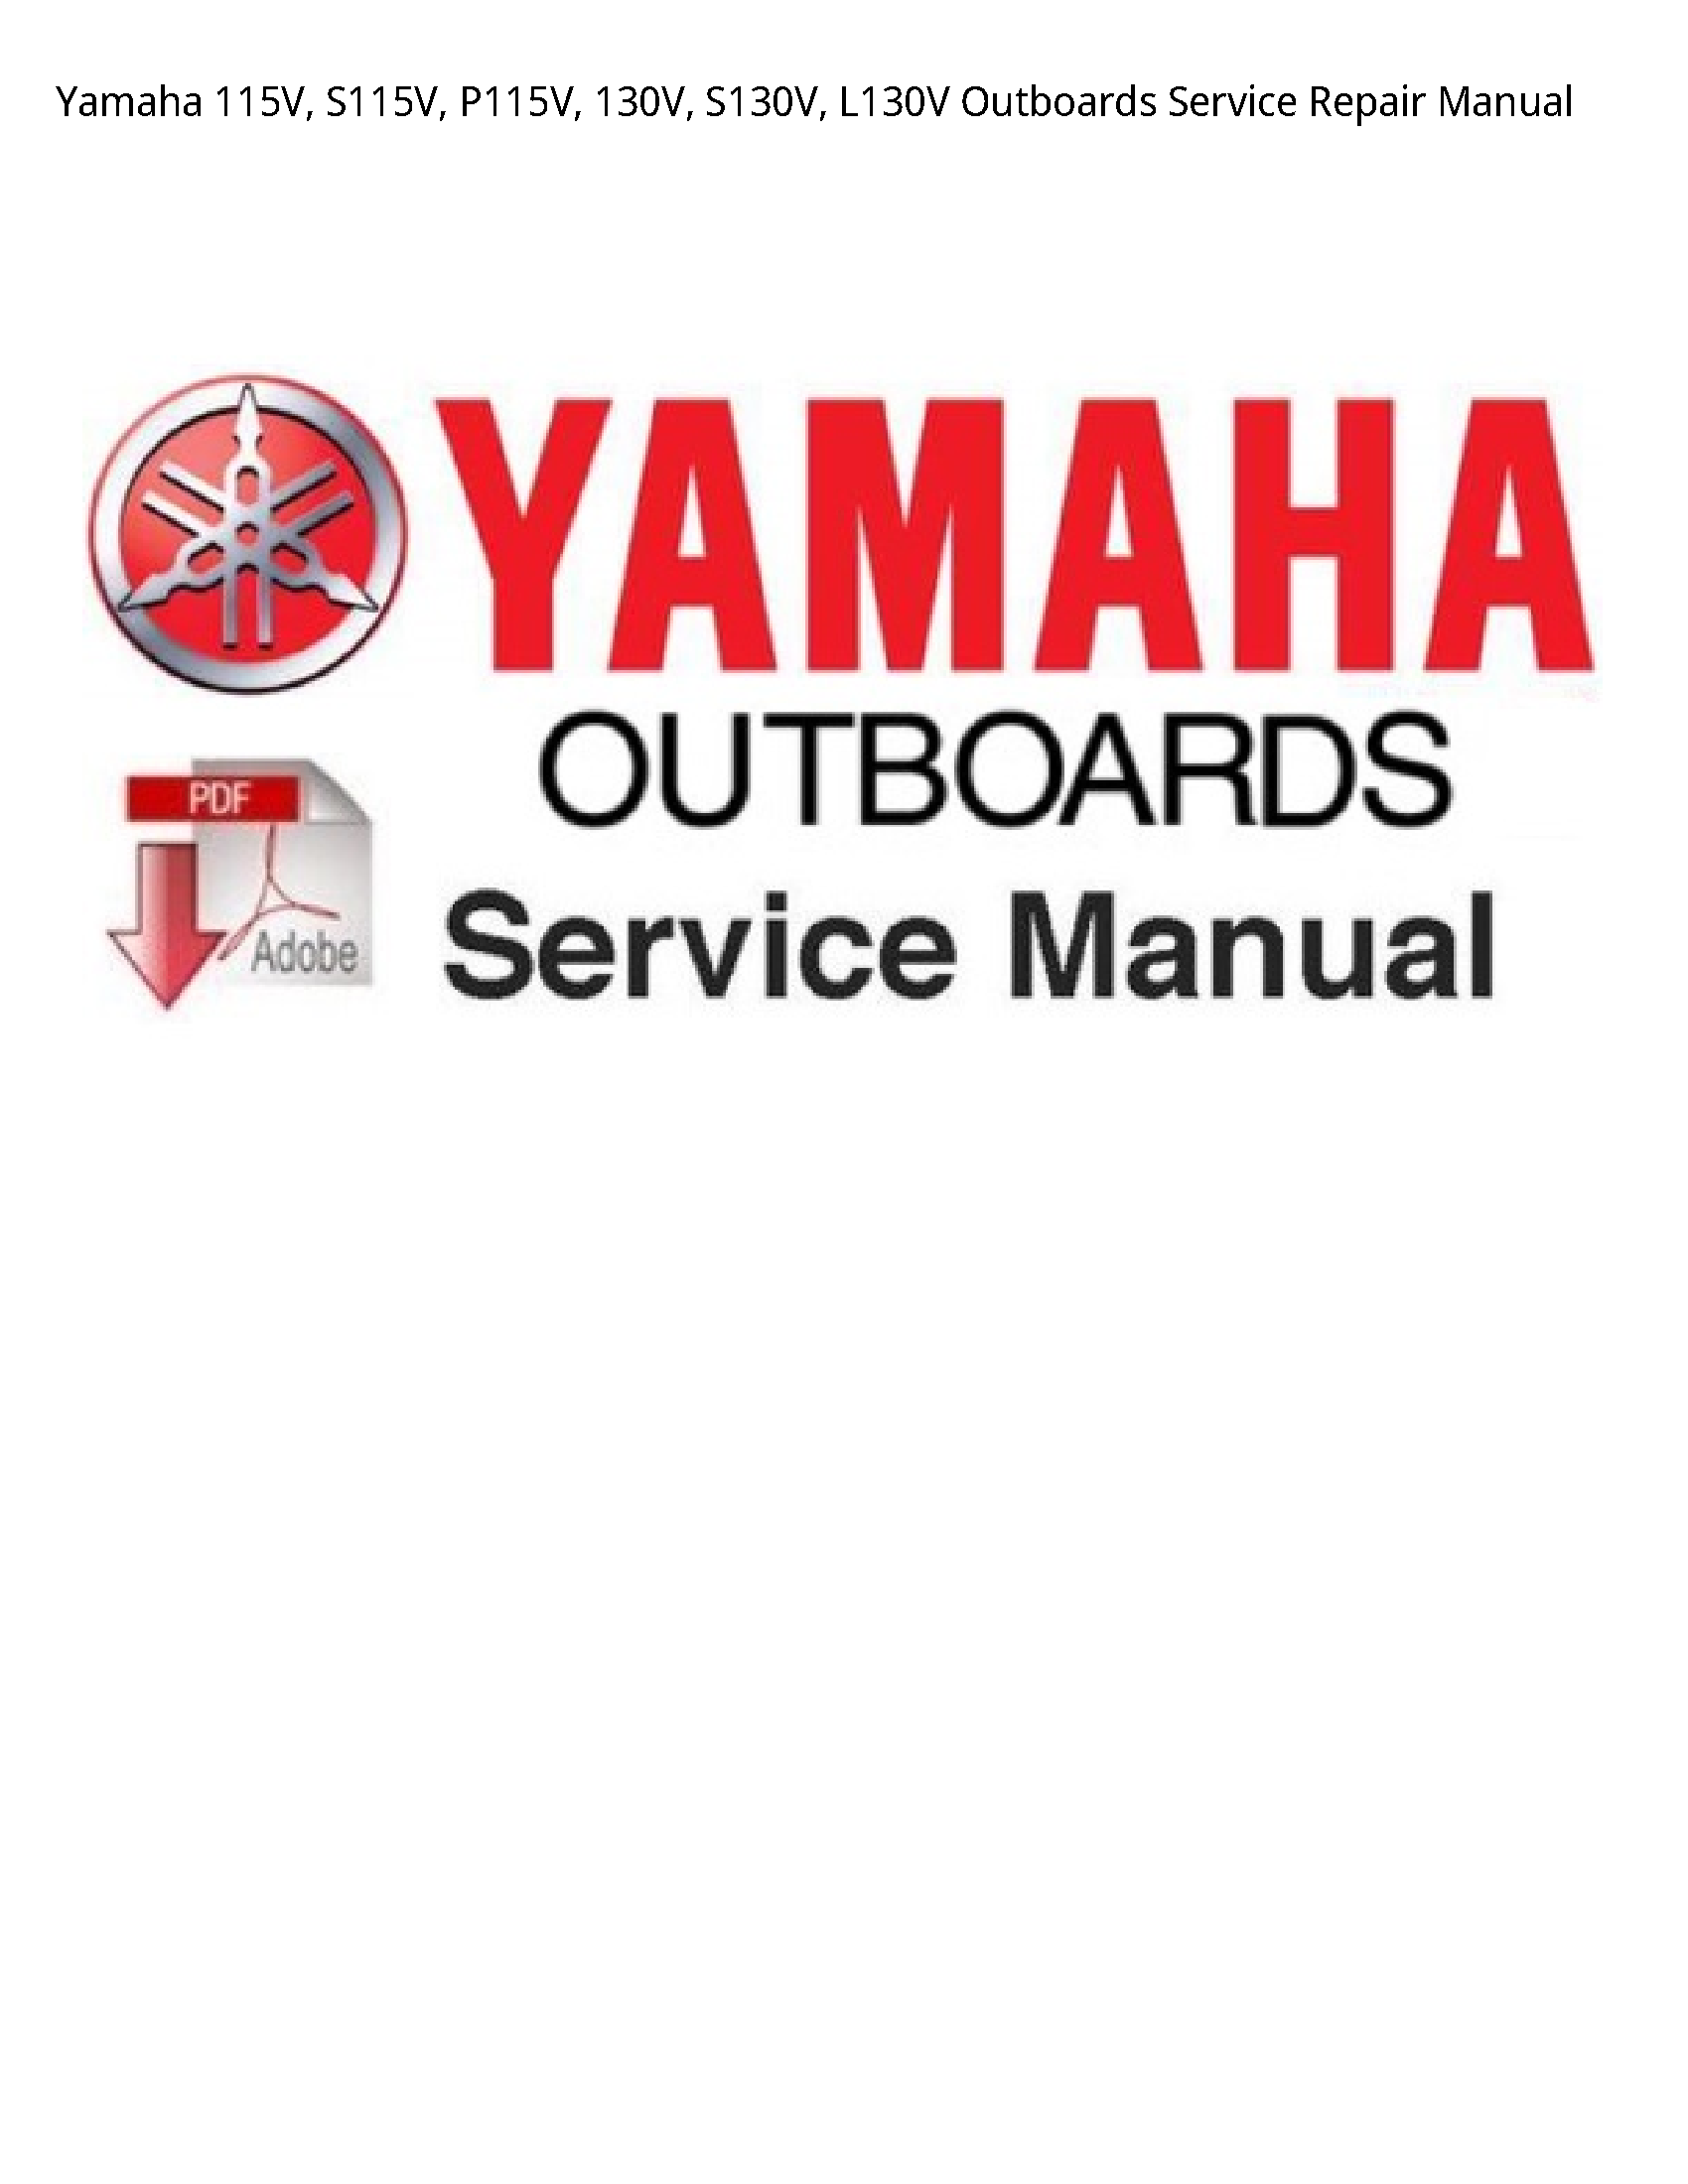 Yamaha 115V Outboards manual